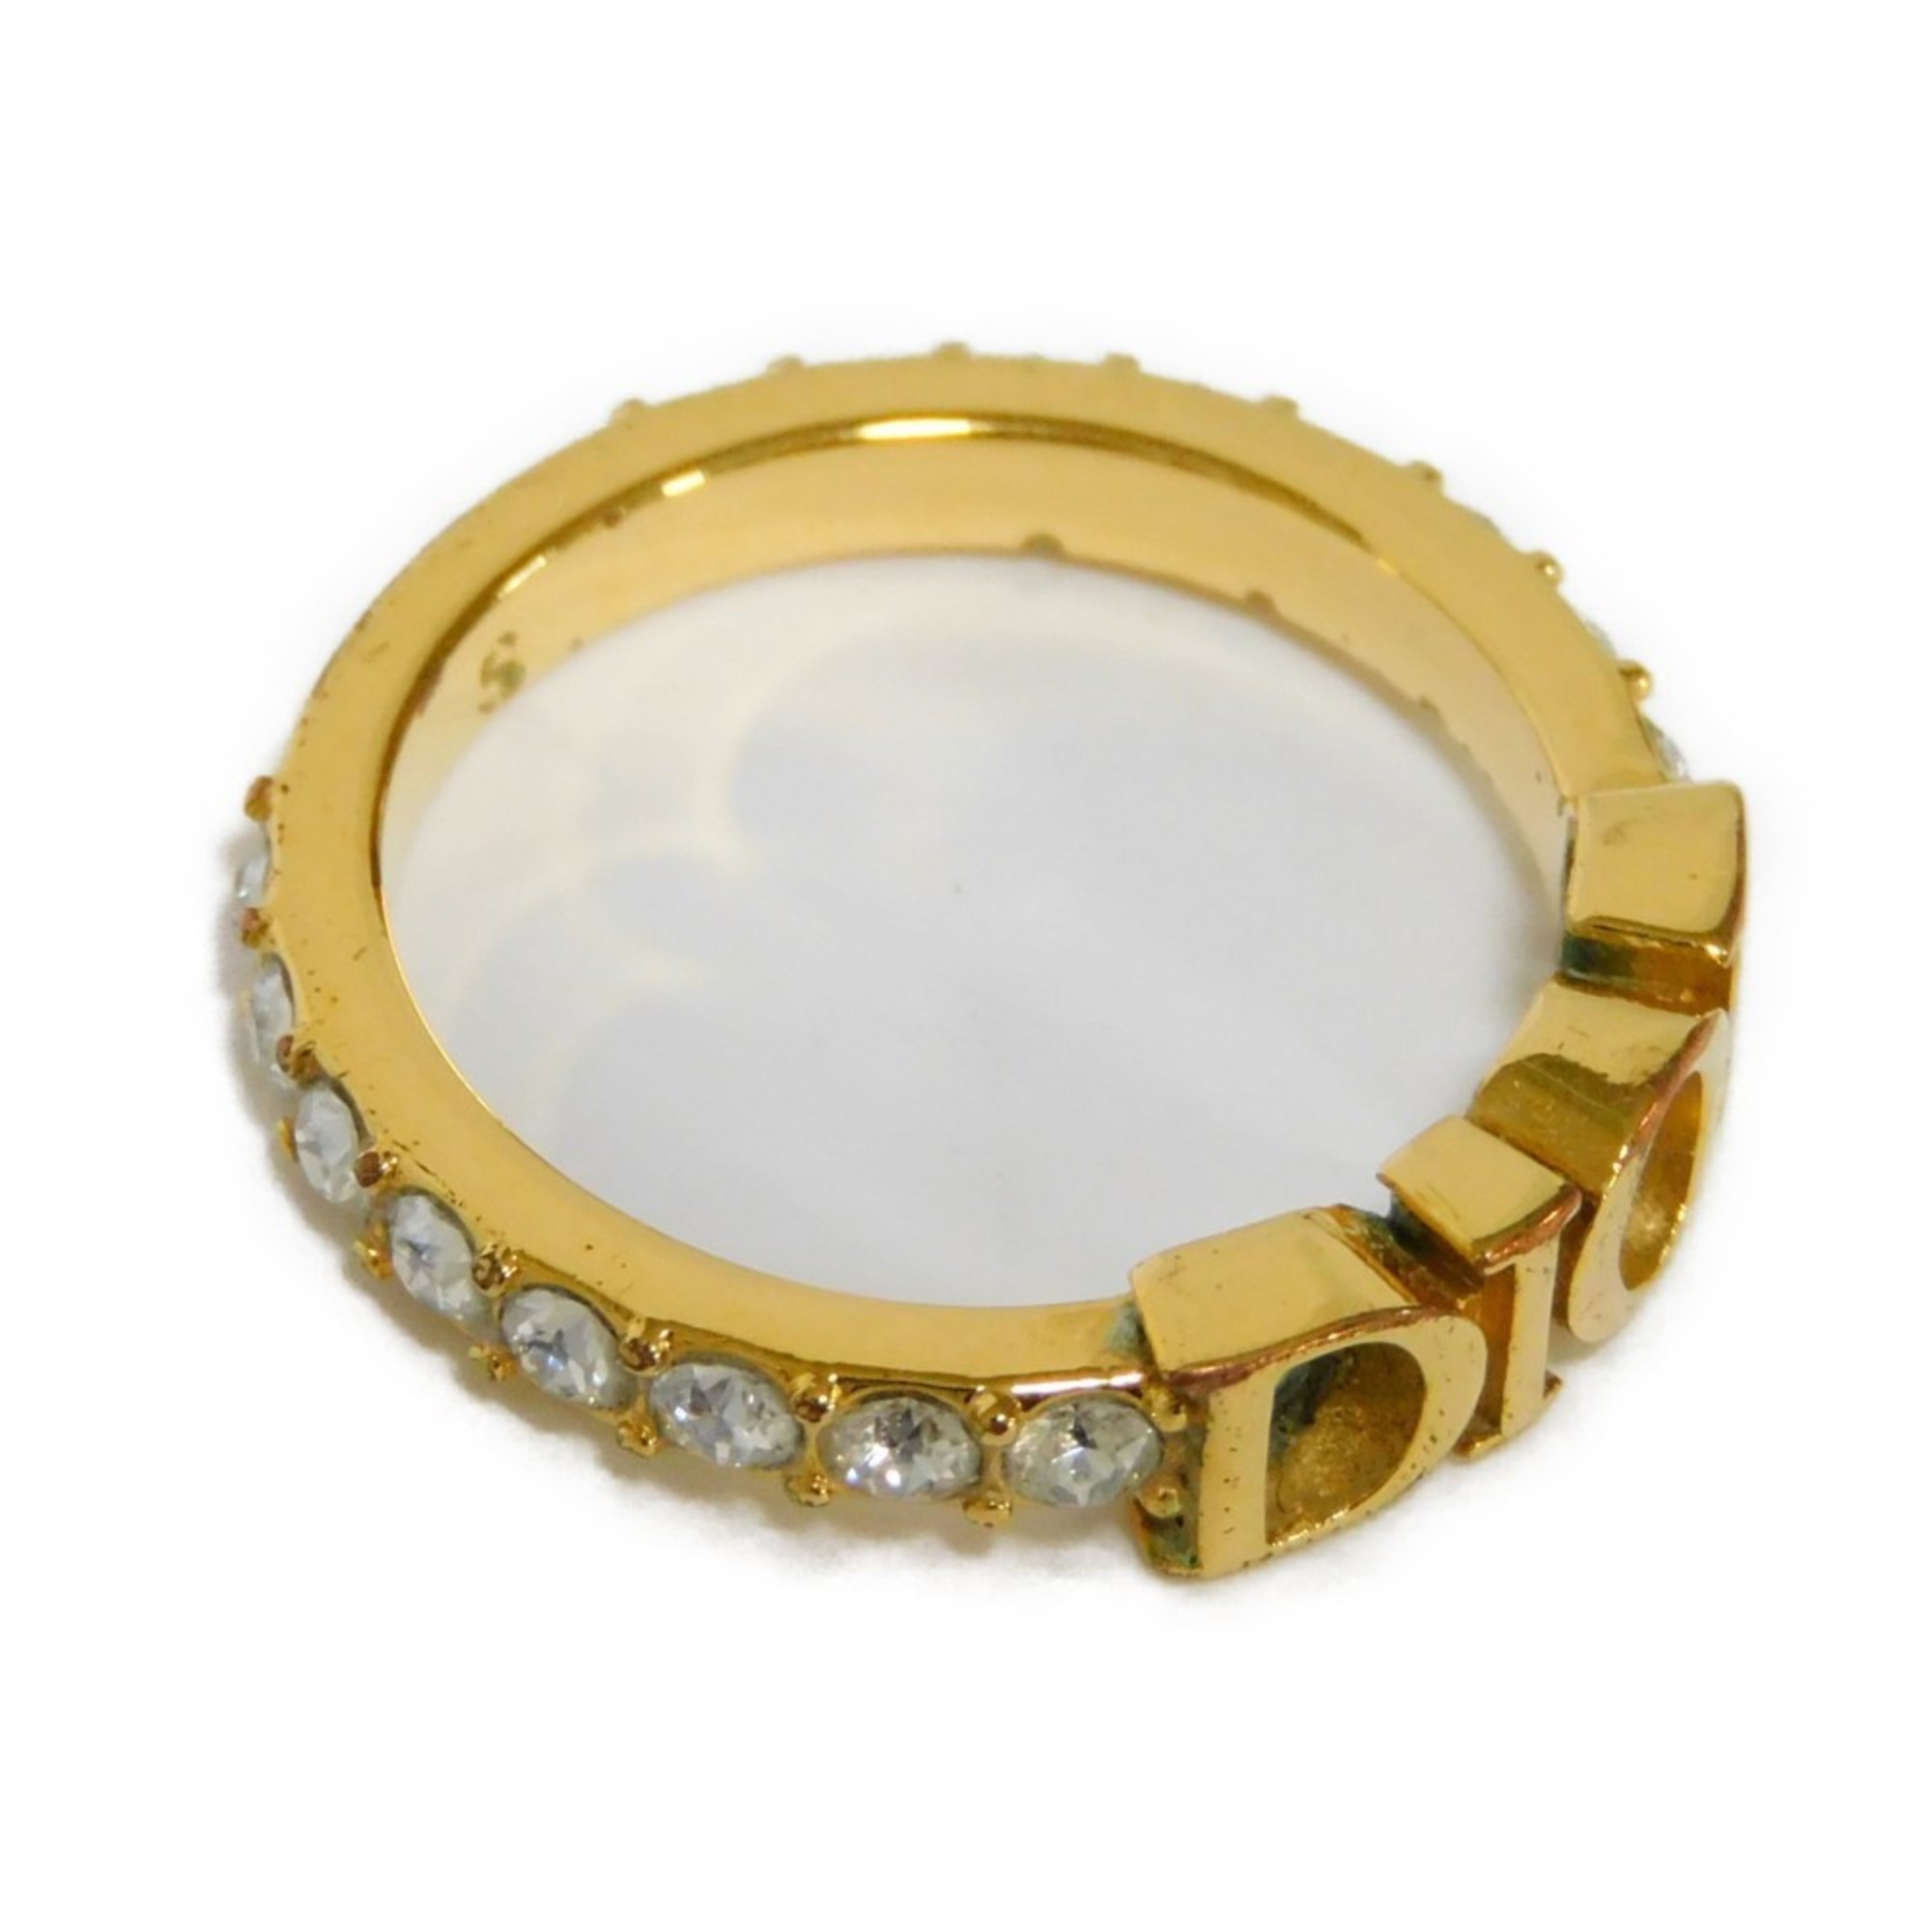 Christian Dior Dior Ring Revolution Logo Crystal Rhinestone S No. 10 DIO(R)EVOLUTION Clear R1009DVOCY_D301 Women's Accessories Jewelry